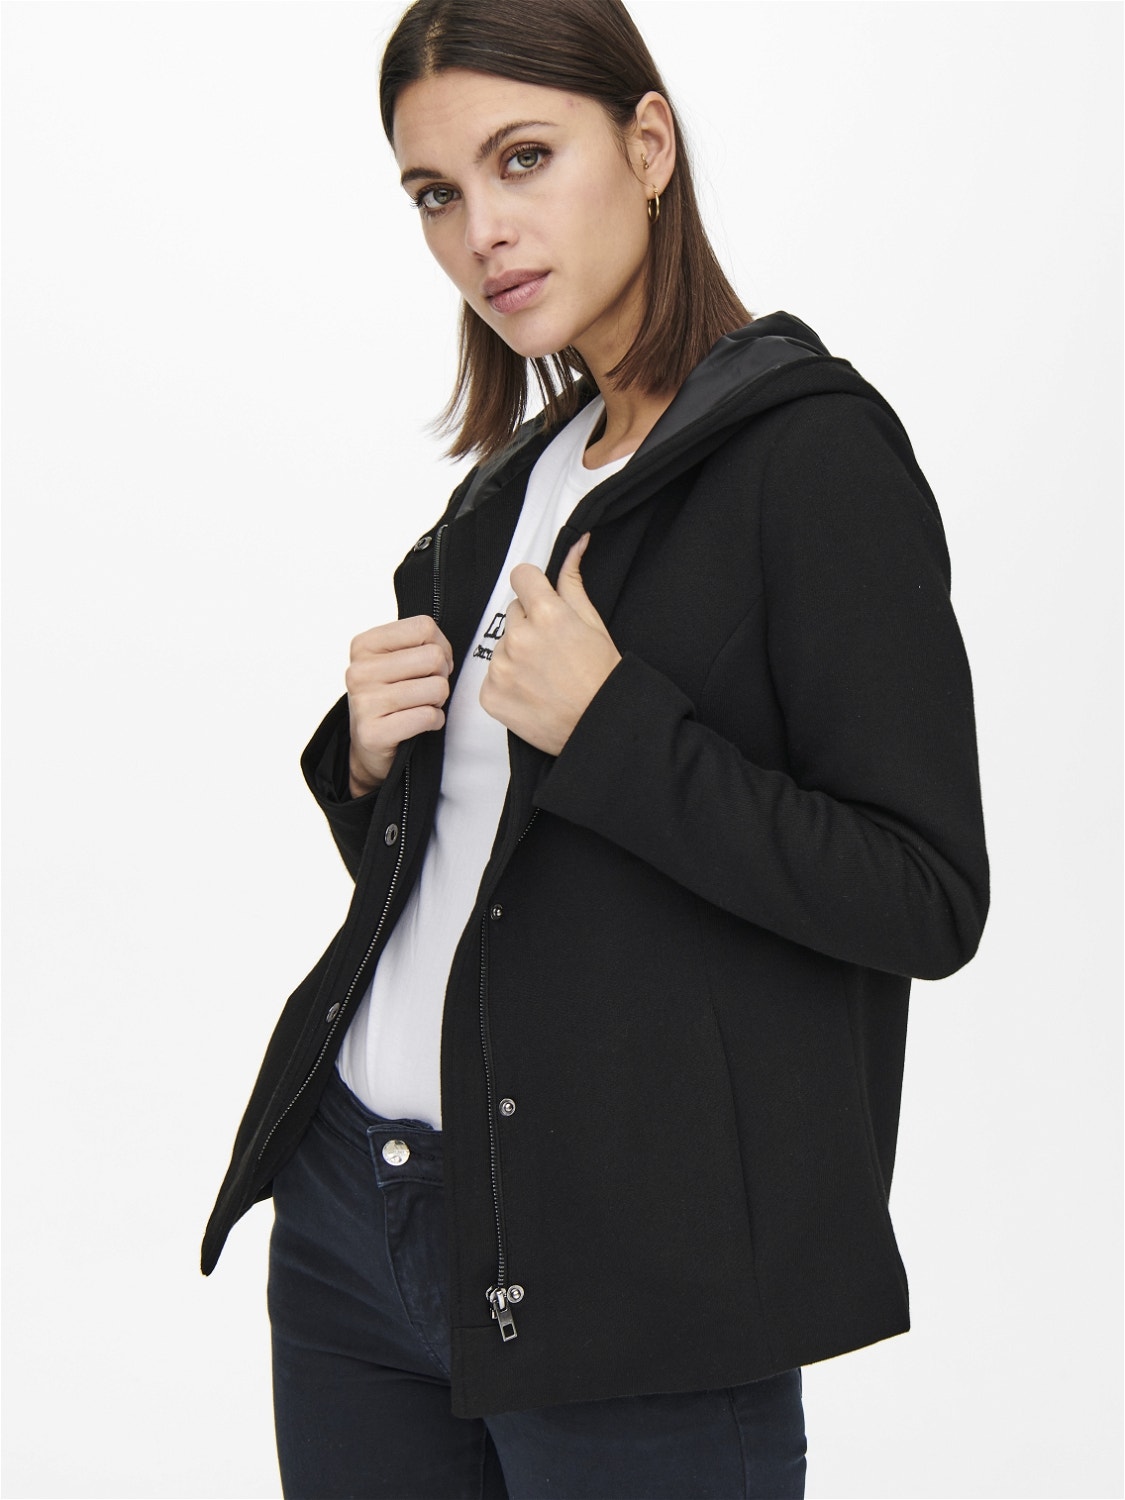 ONLY Drapy oversized hood Jacket -Black - 15186683